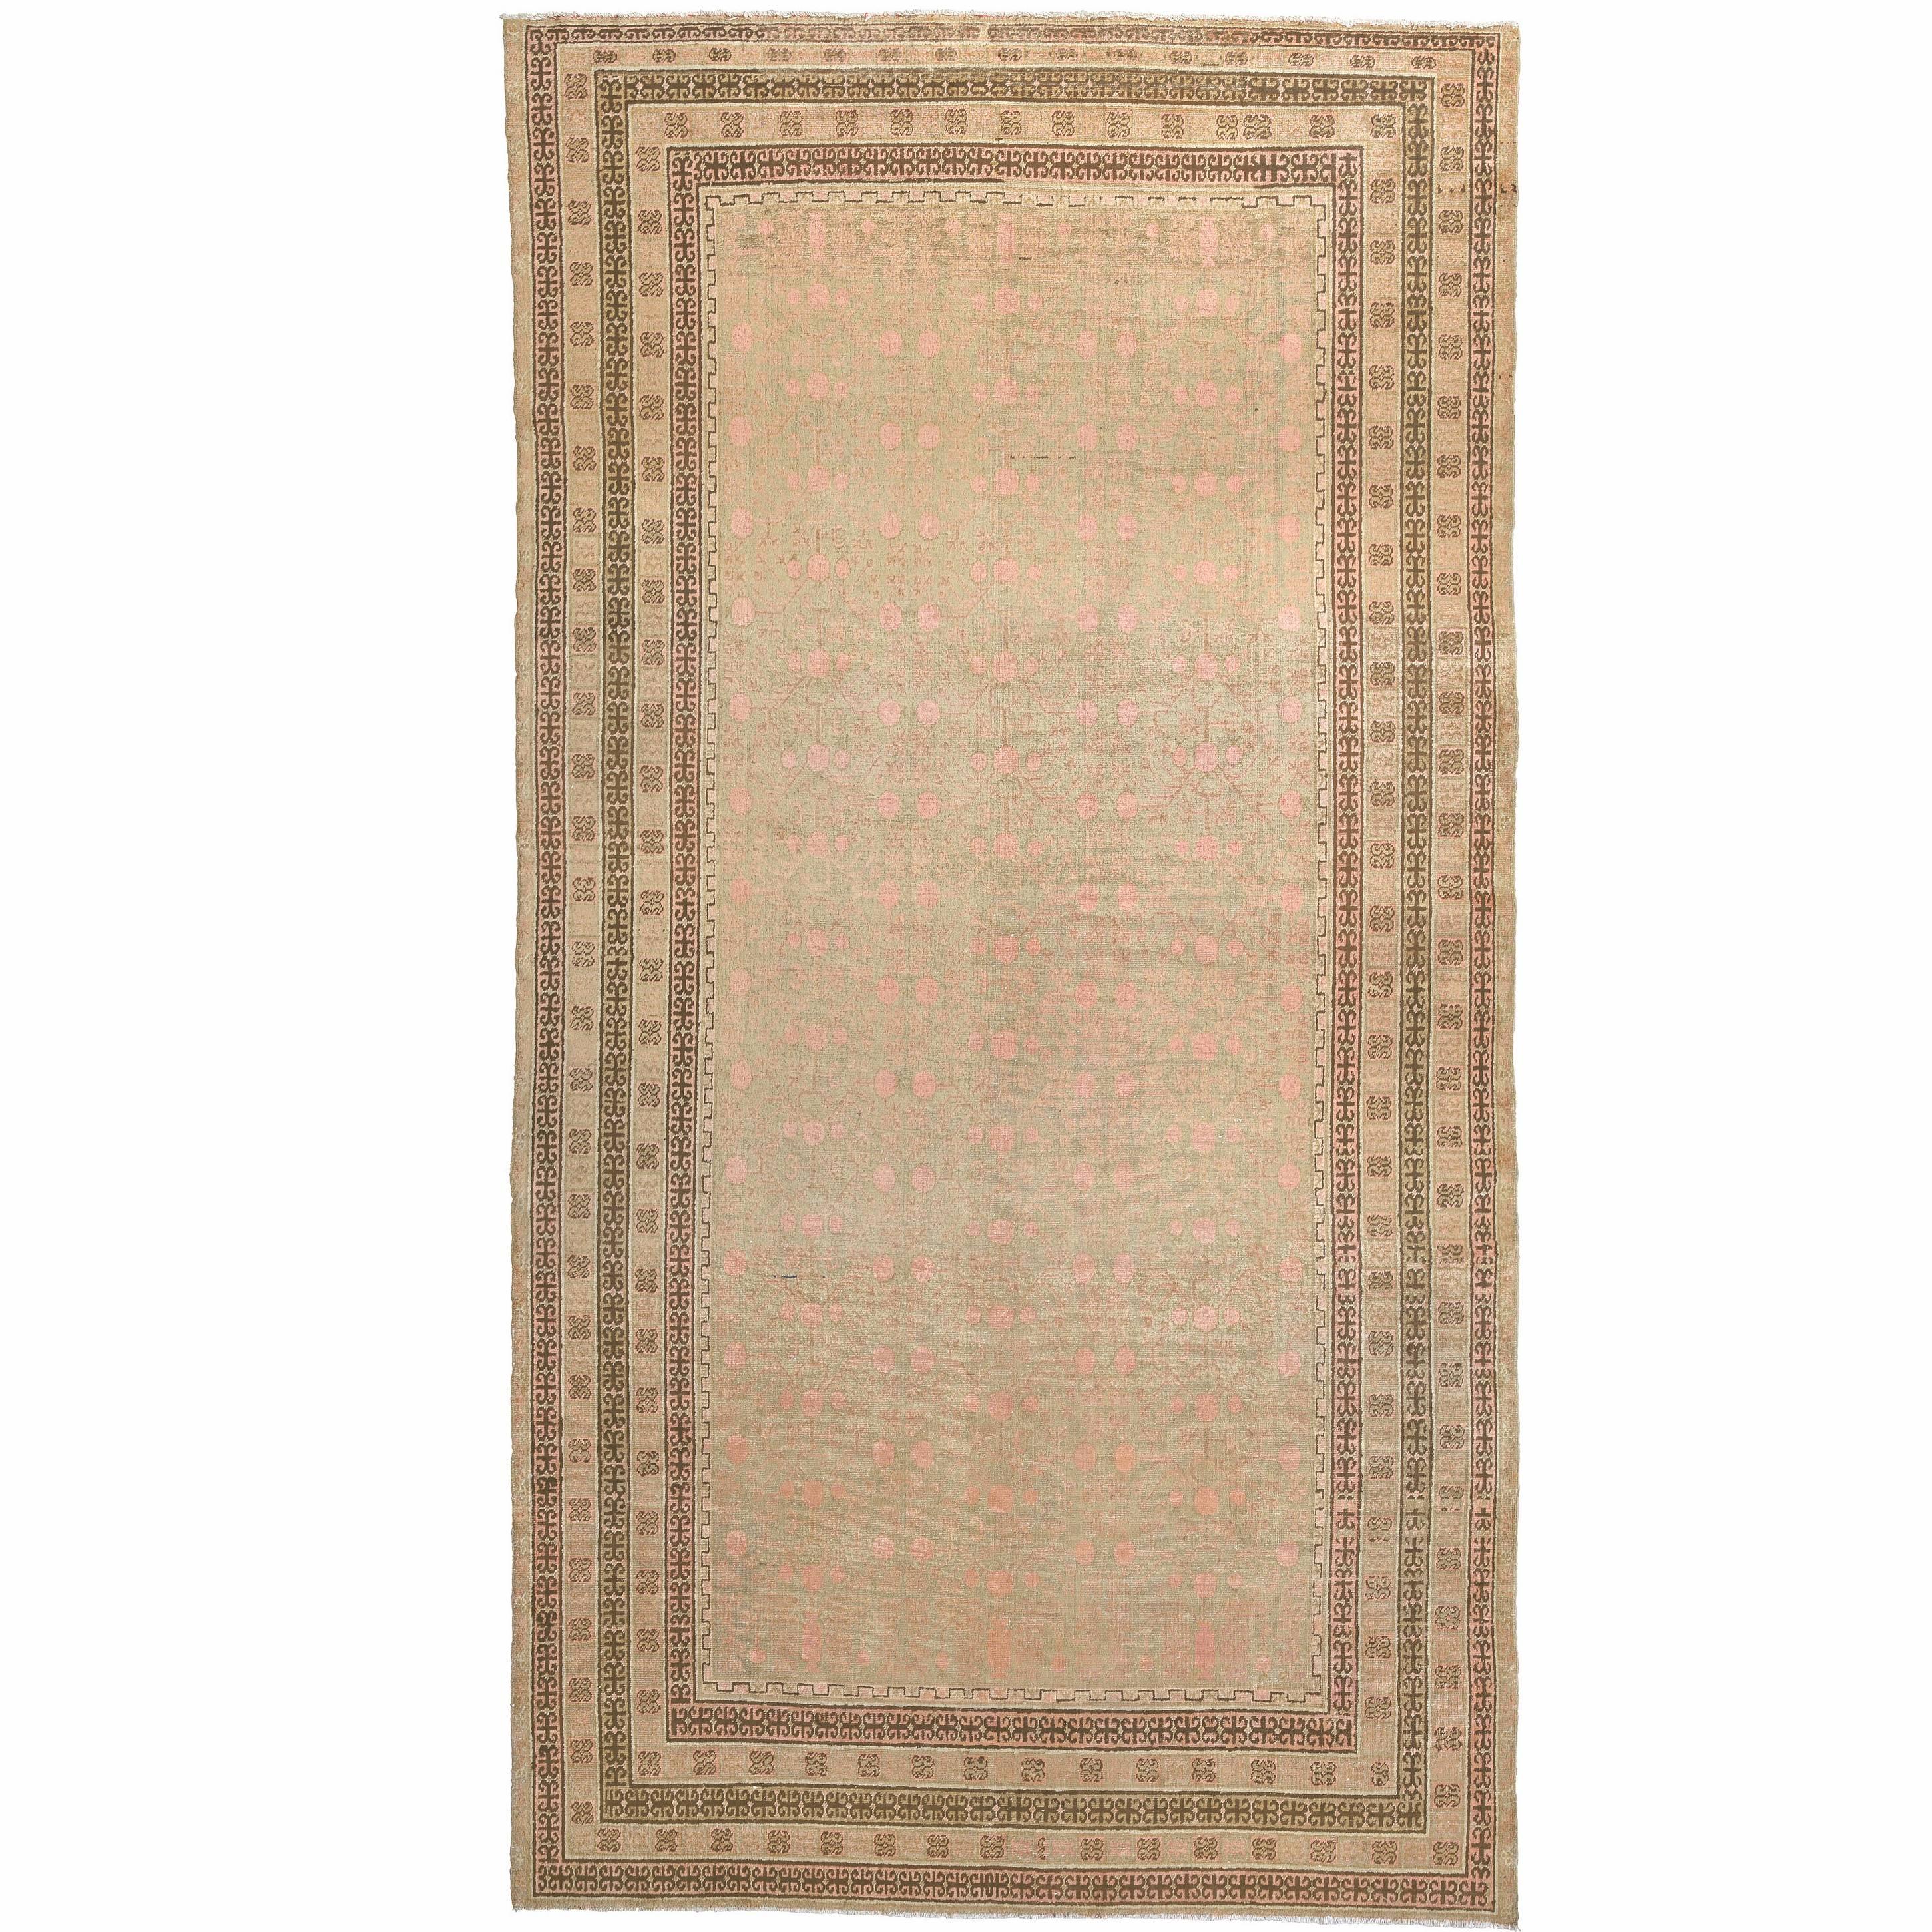 Early 20th Century Khotan Carpet